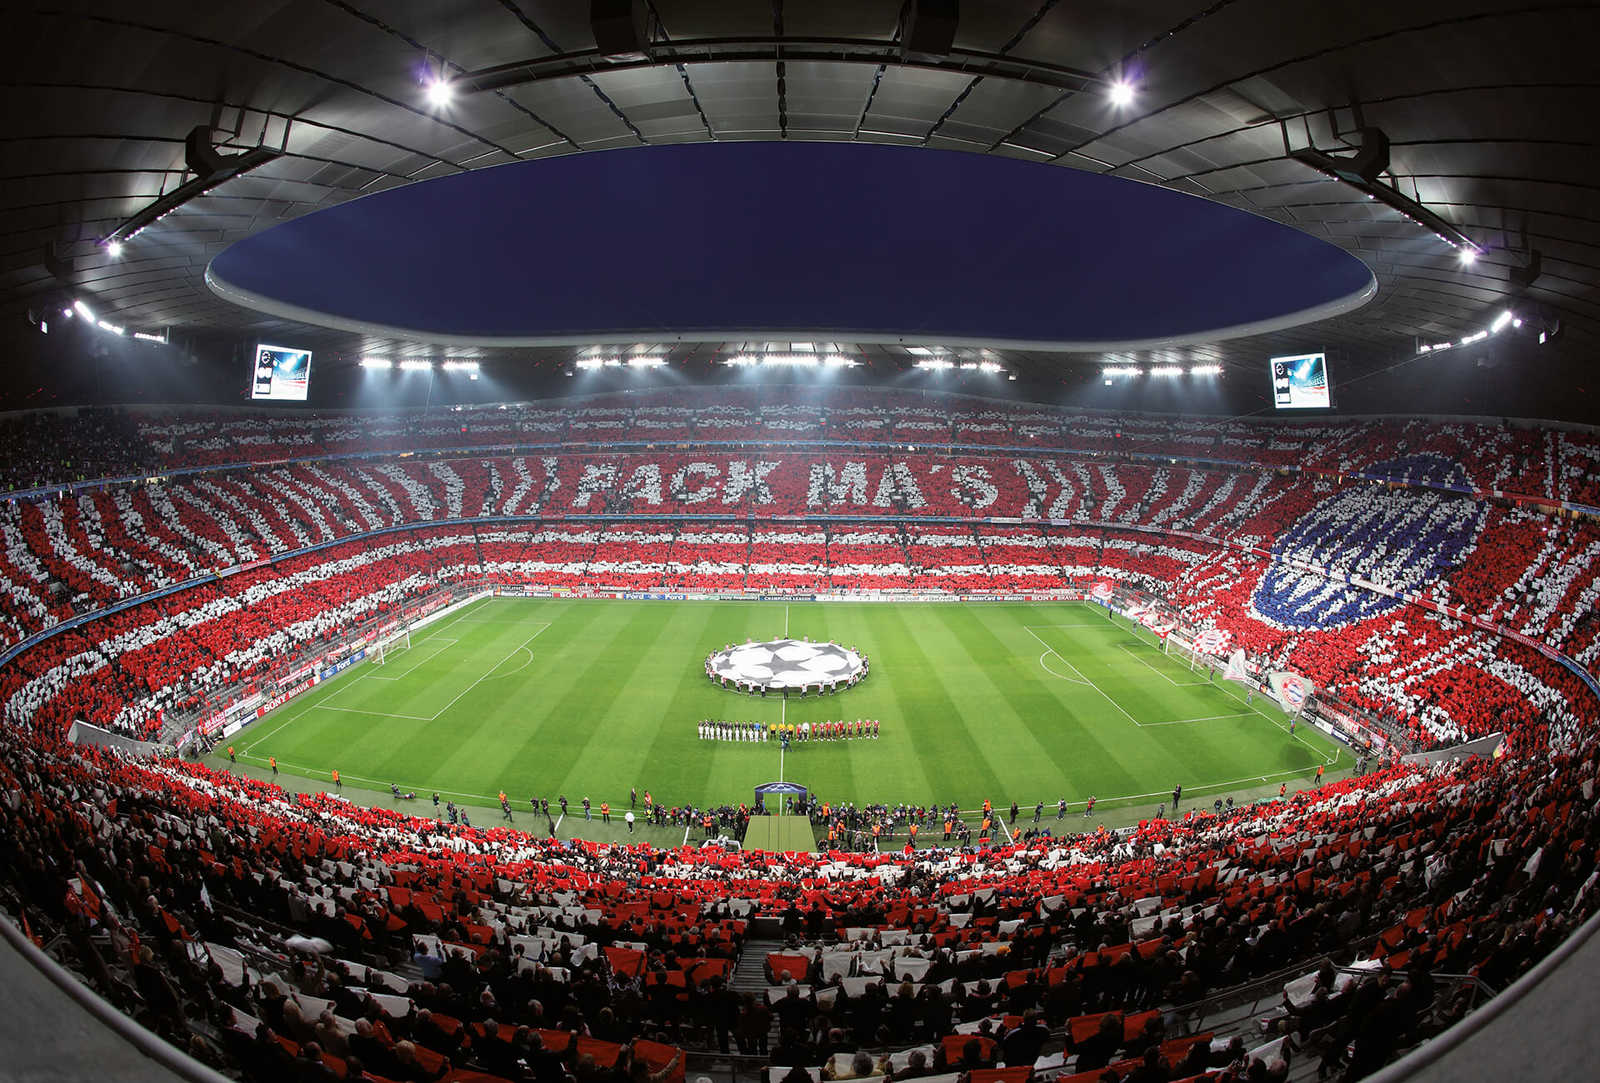         FC Bayern stadium & fan choreography mural
    